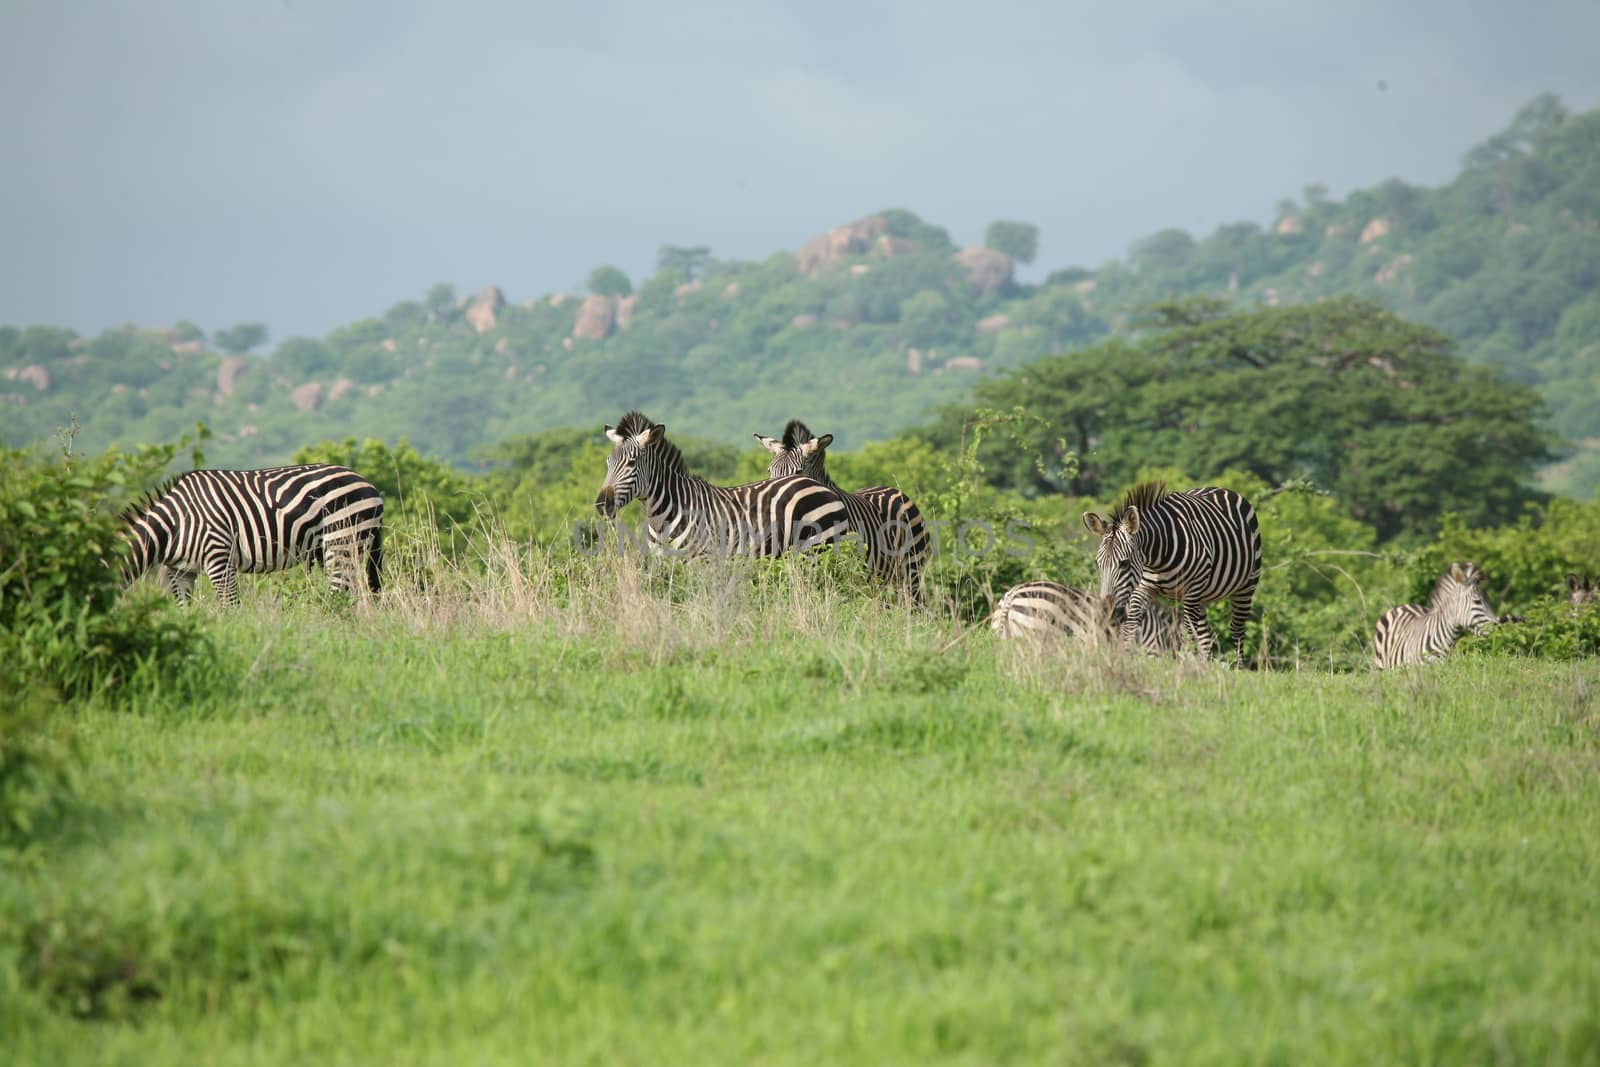 Zebra Botswana Africa savannah wild animal picture